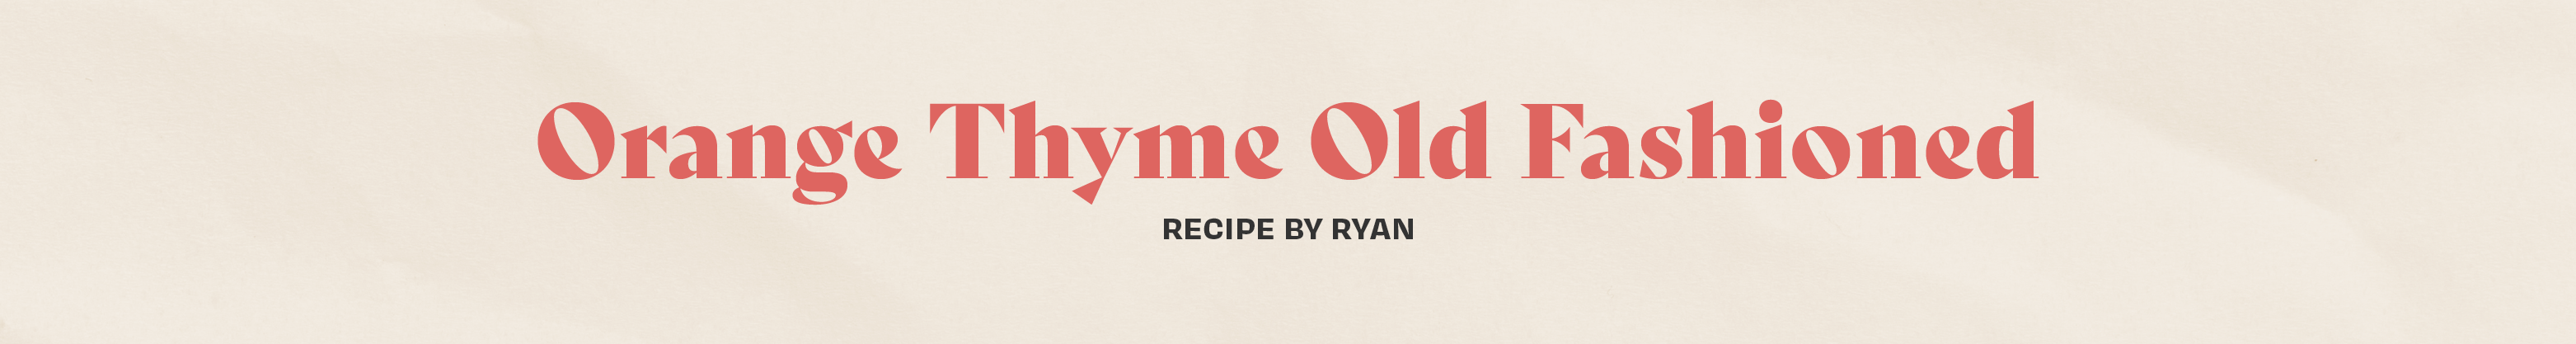 Ryan - Orange Thyme Old Fashioned